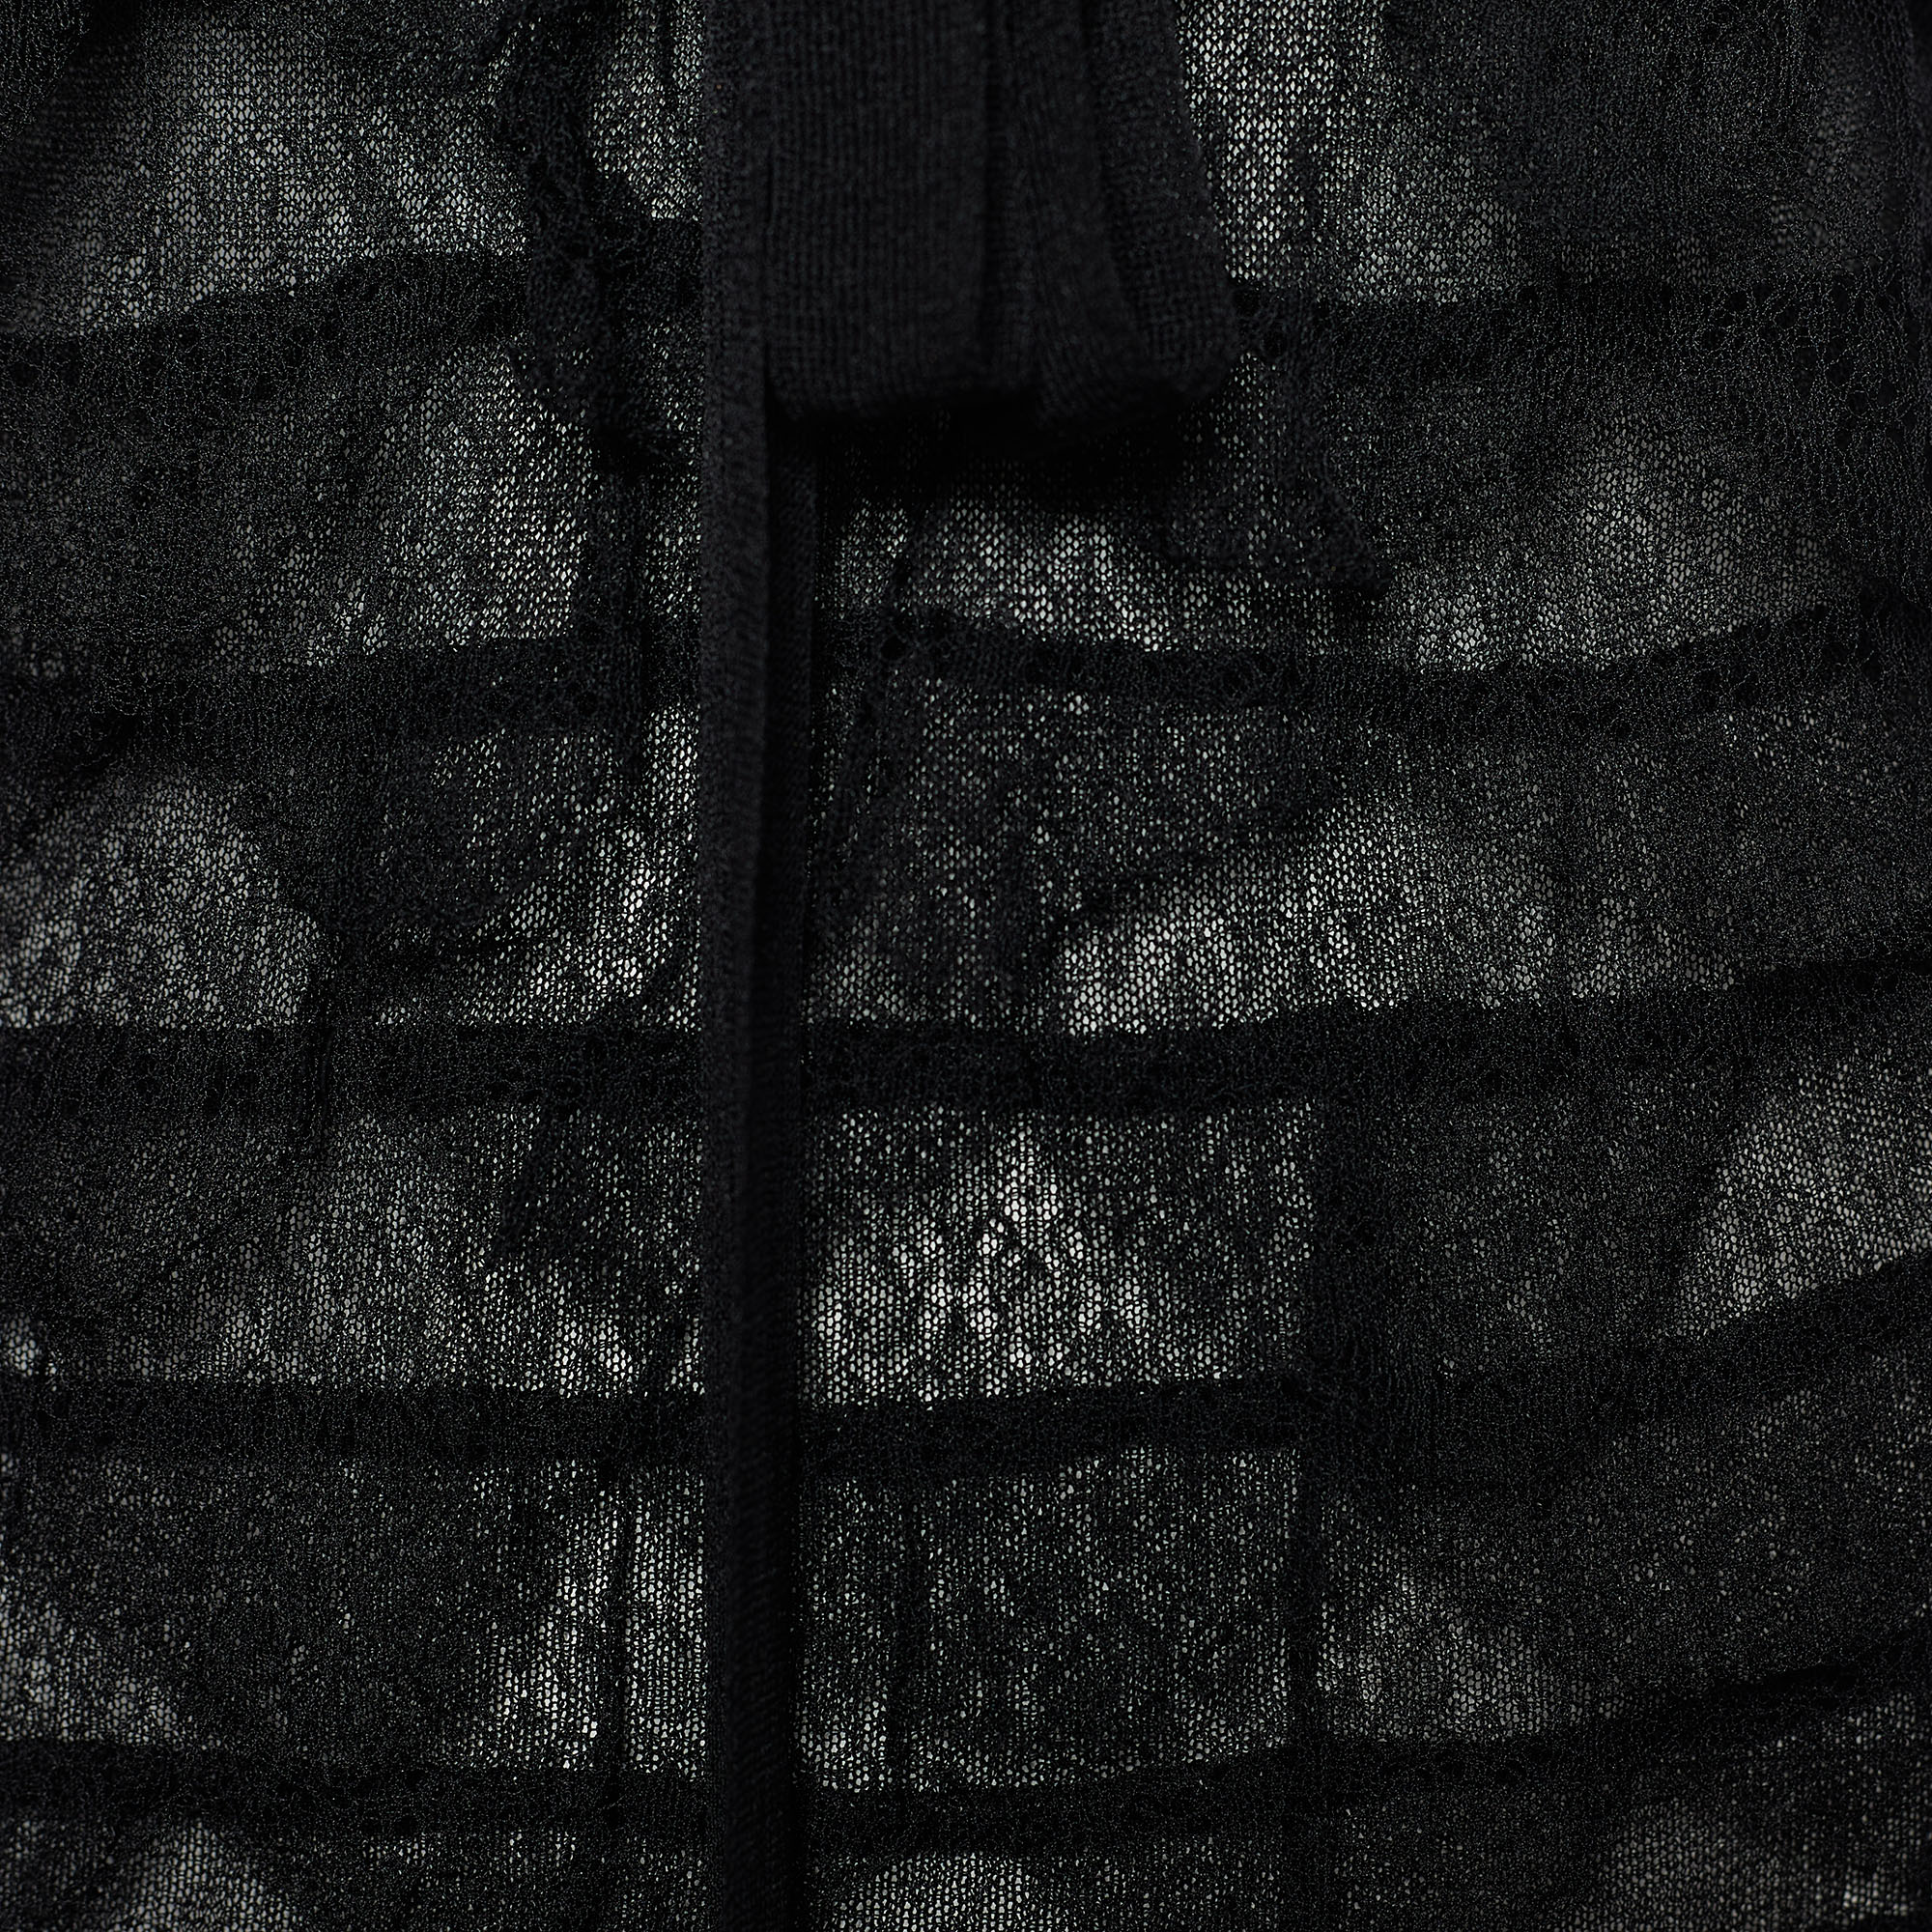 Roberto Cavalli Black Lace Frill Detail Sleeveless Top S